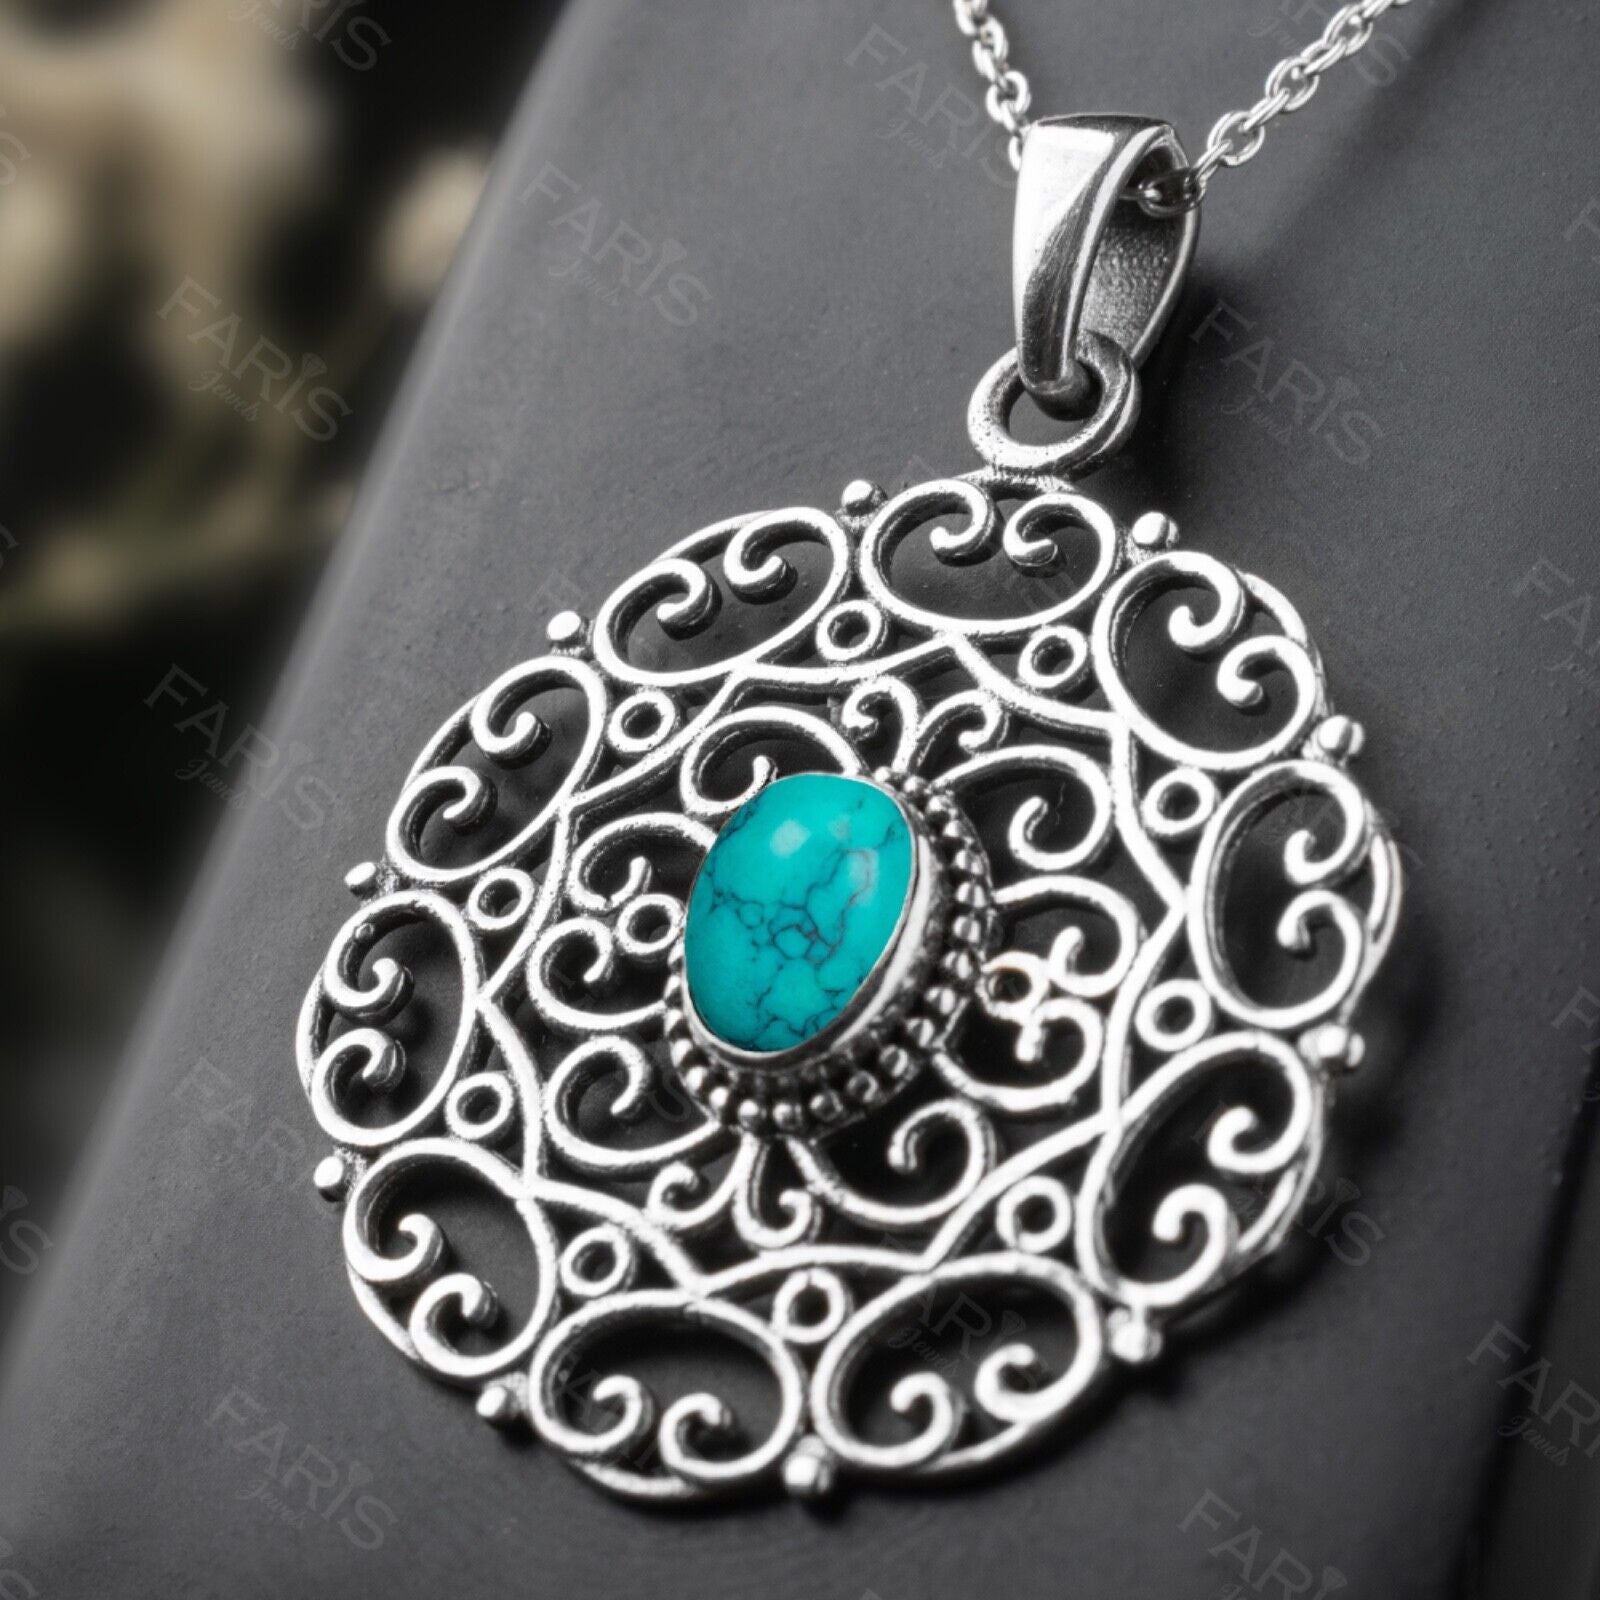 Sterling Silver 925 Oval Cut Turquoise Gemstone Pendant Necklace Vintage Design